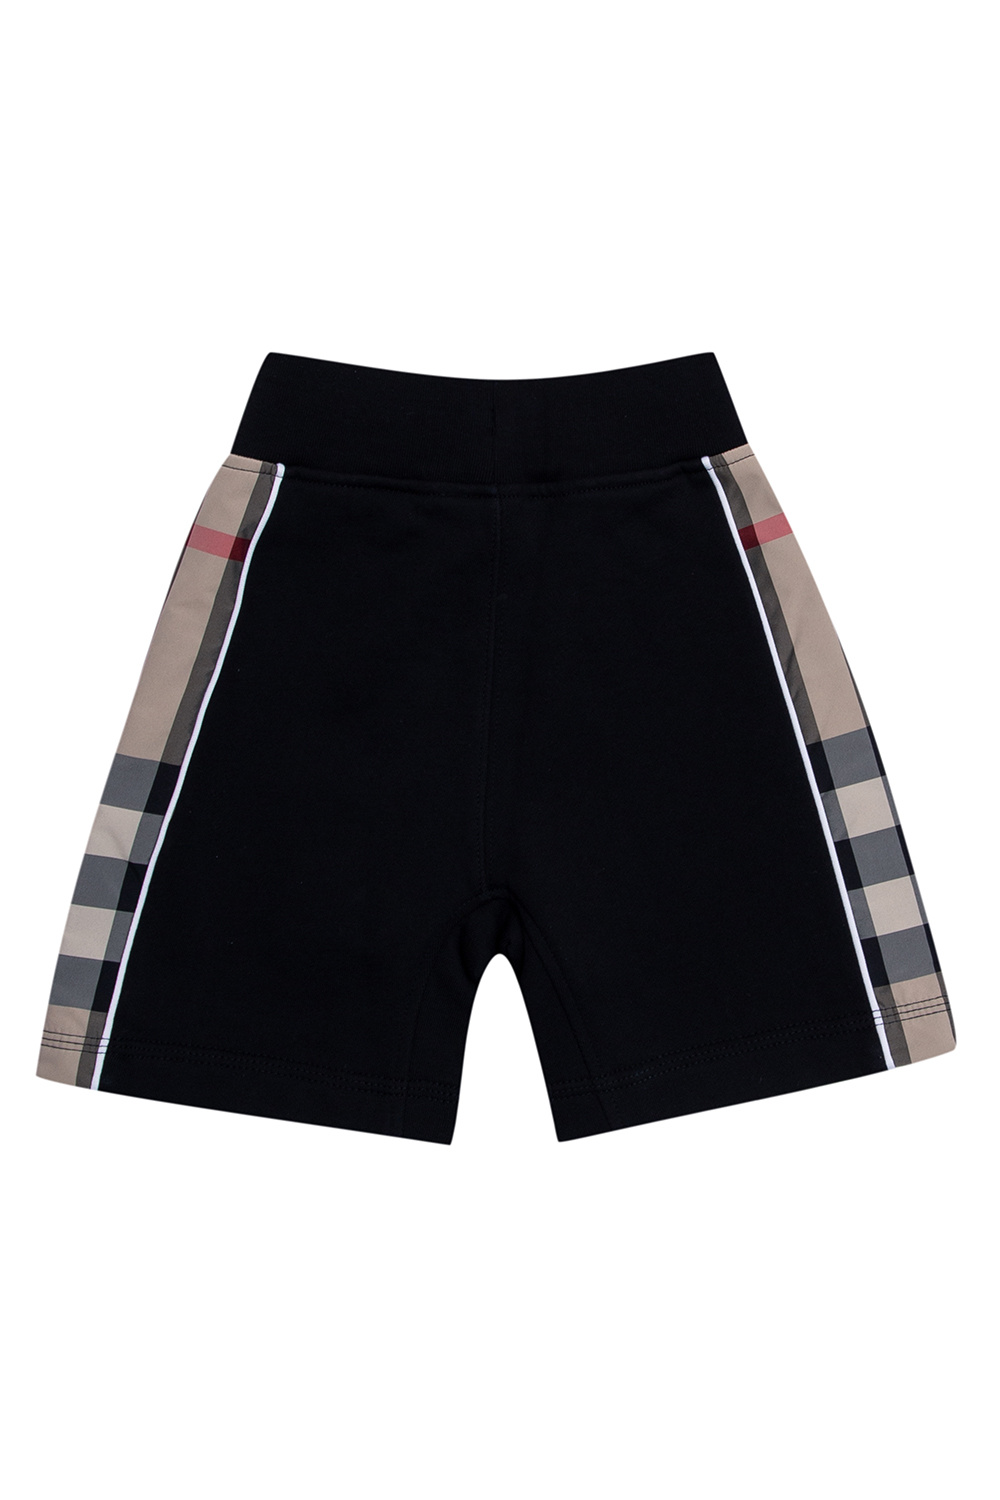 burberry Jacket Kids Sweat shorts